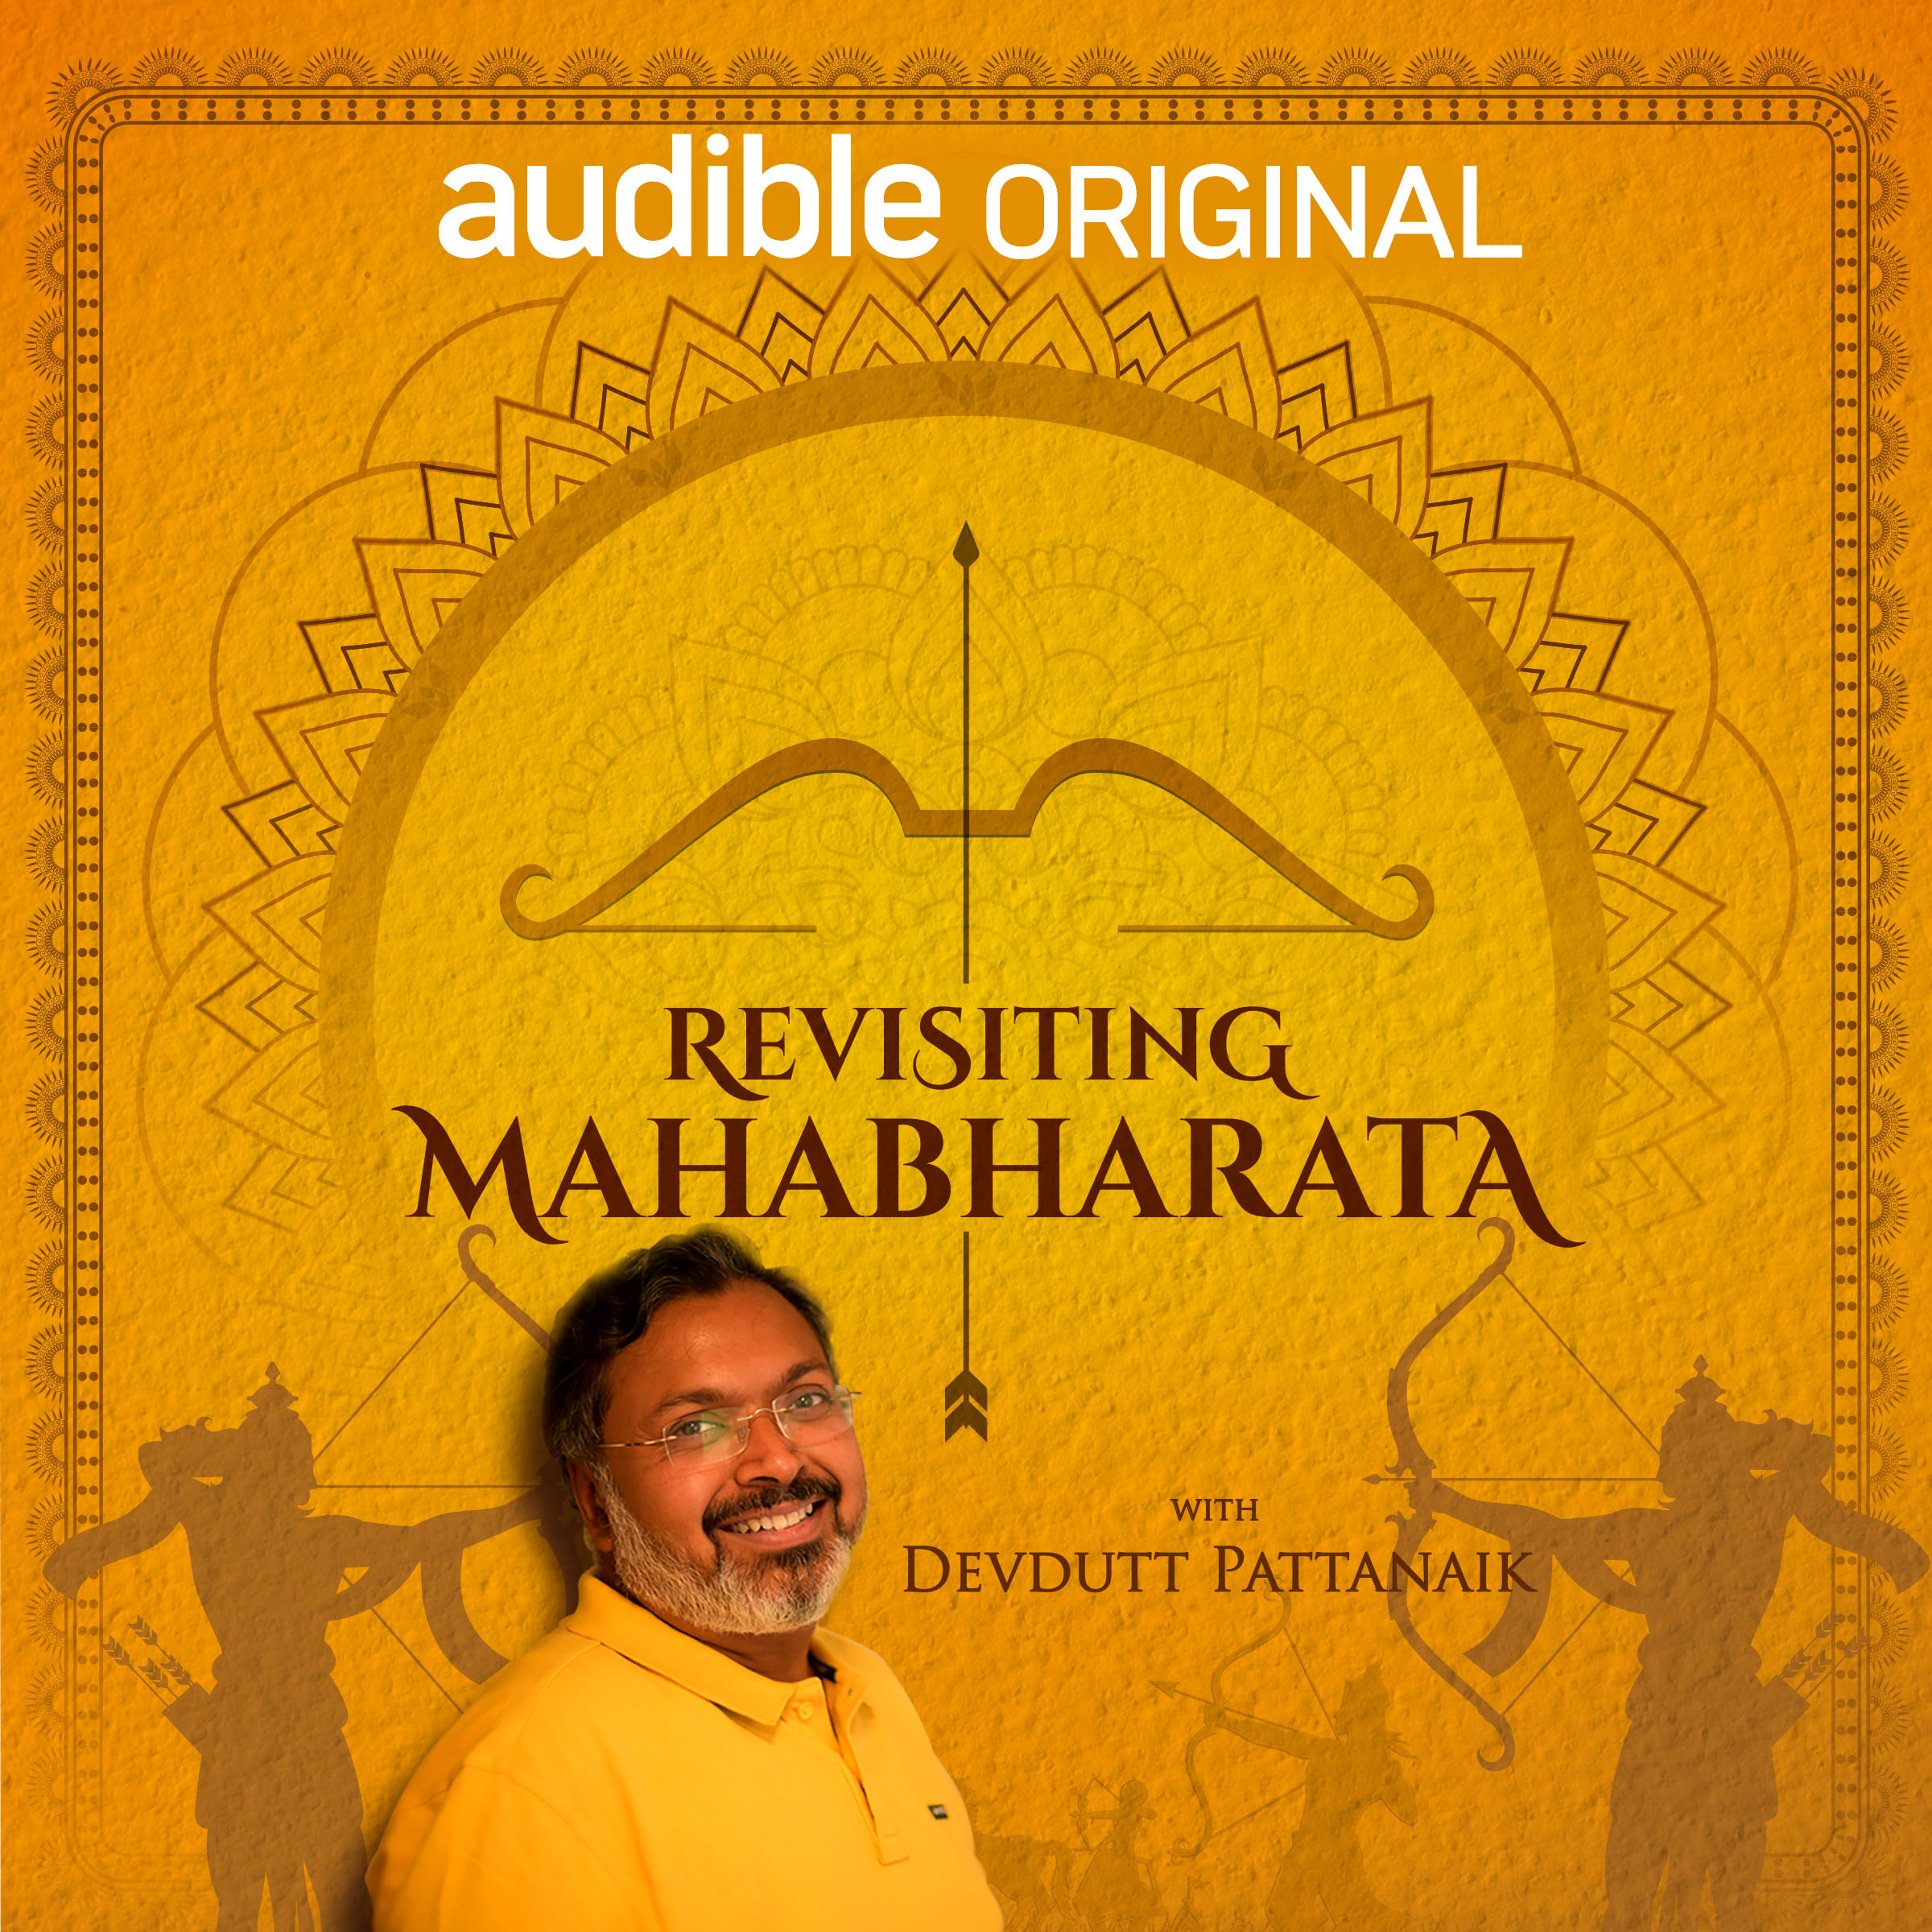 Revisiting Mahabharata with Devdutt Pattanaik